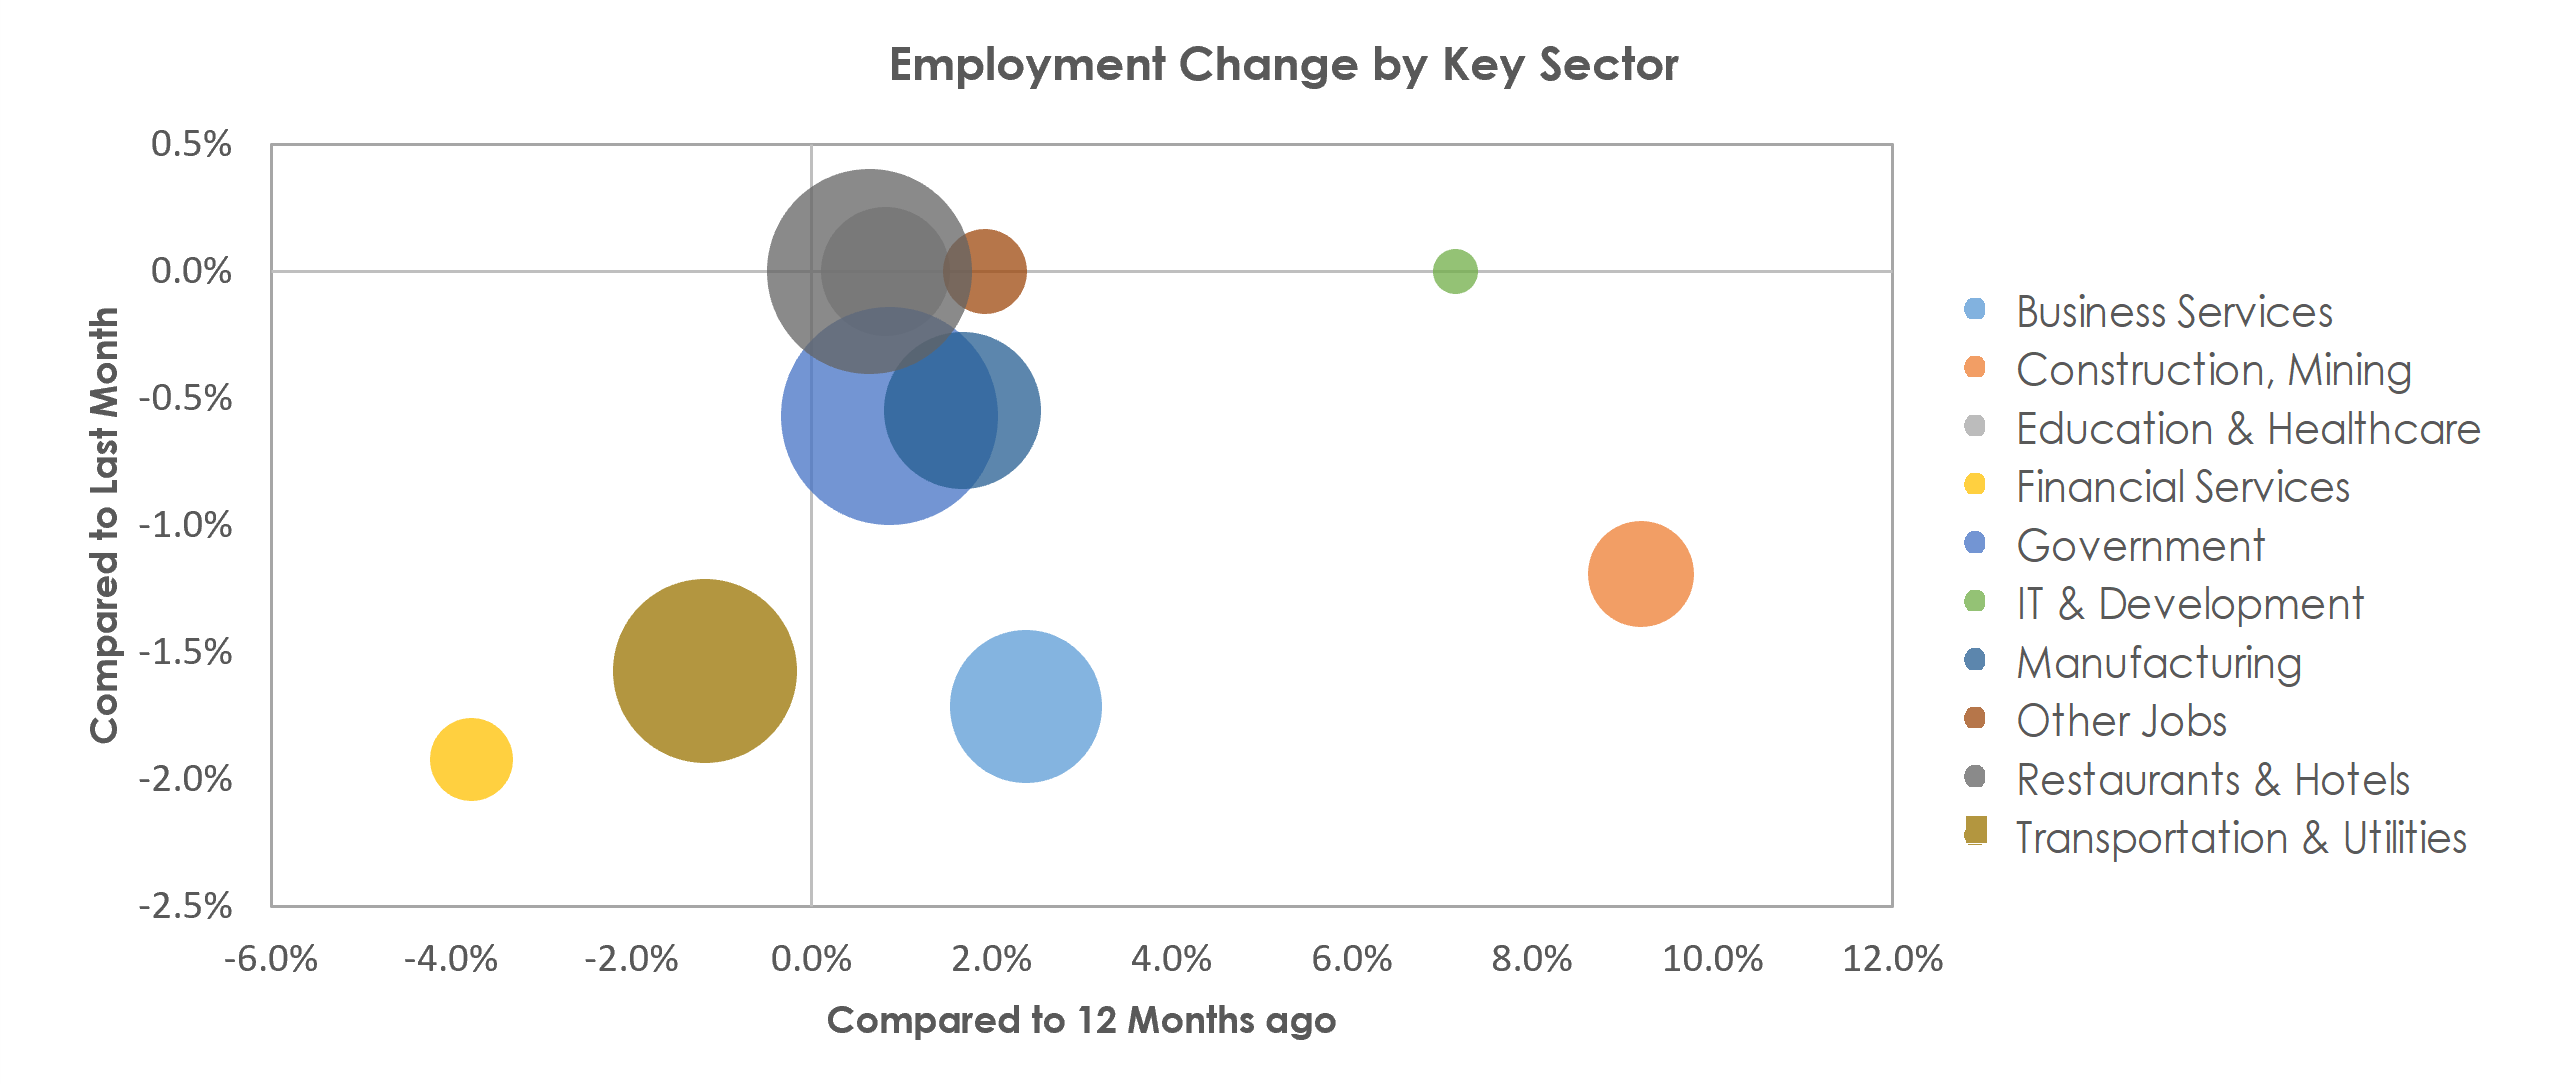 Gulfport-Biloxi-Pascagoula, MS Unemployment by Industry July 2022